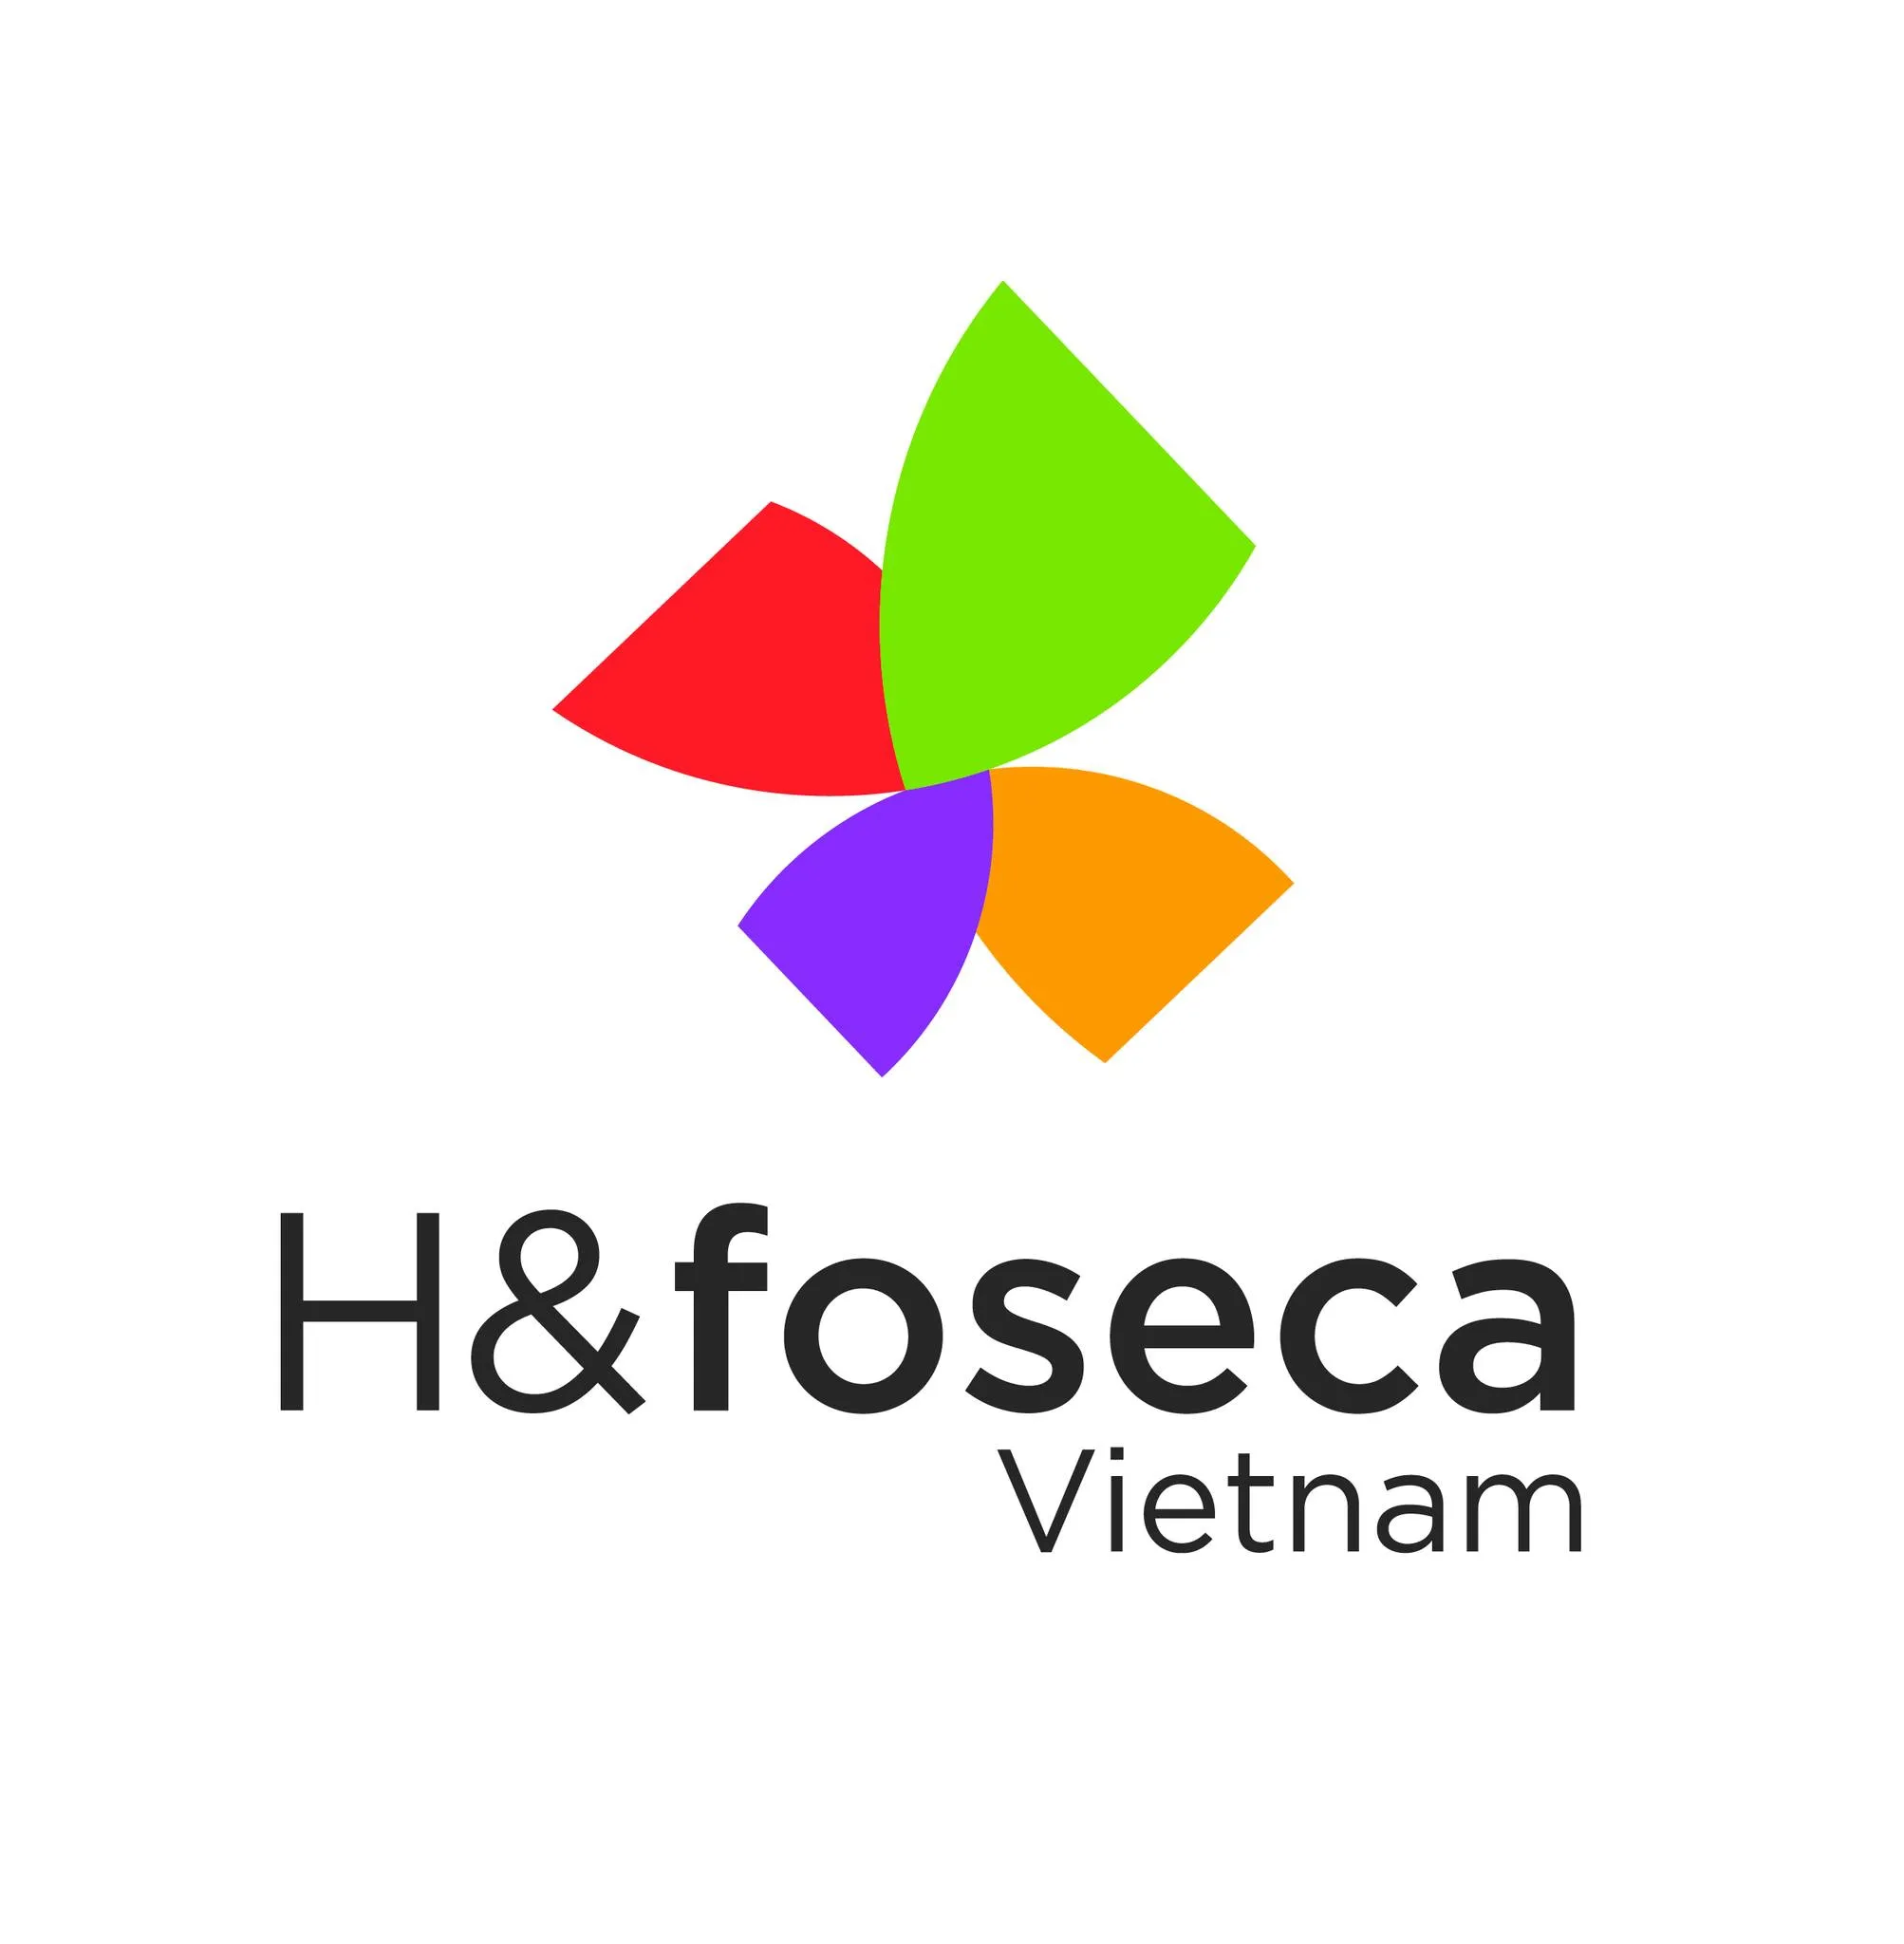 H&FOSECA